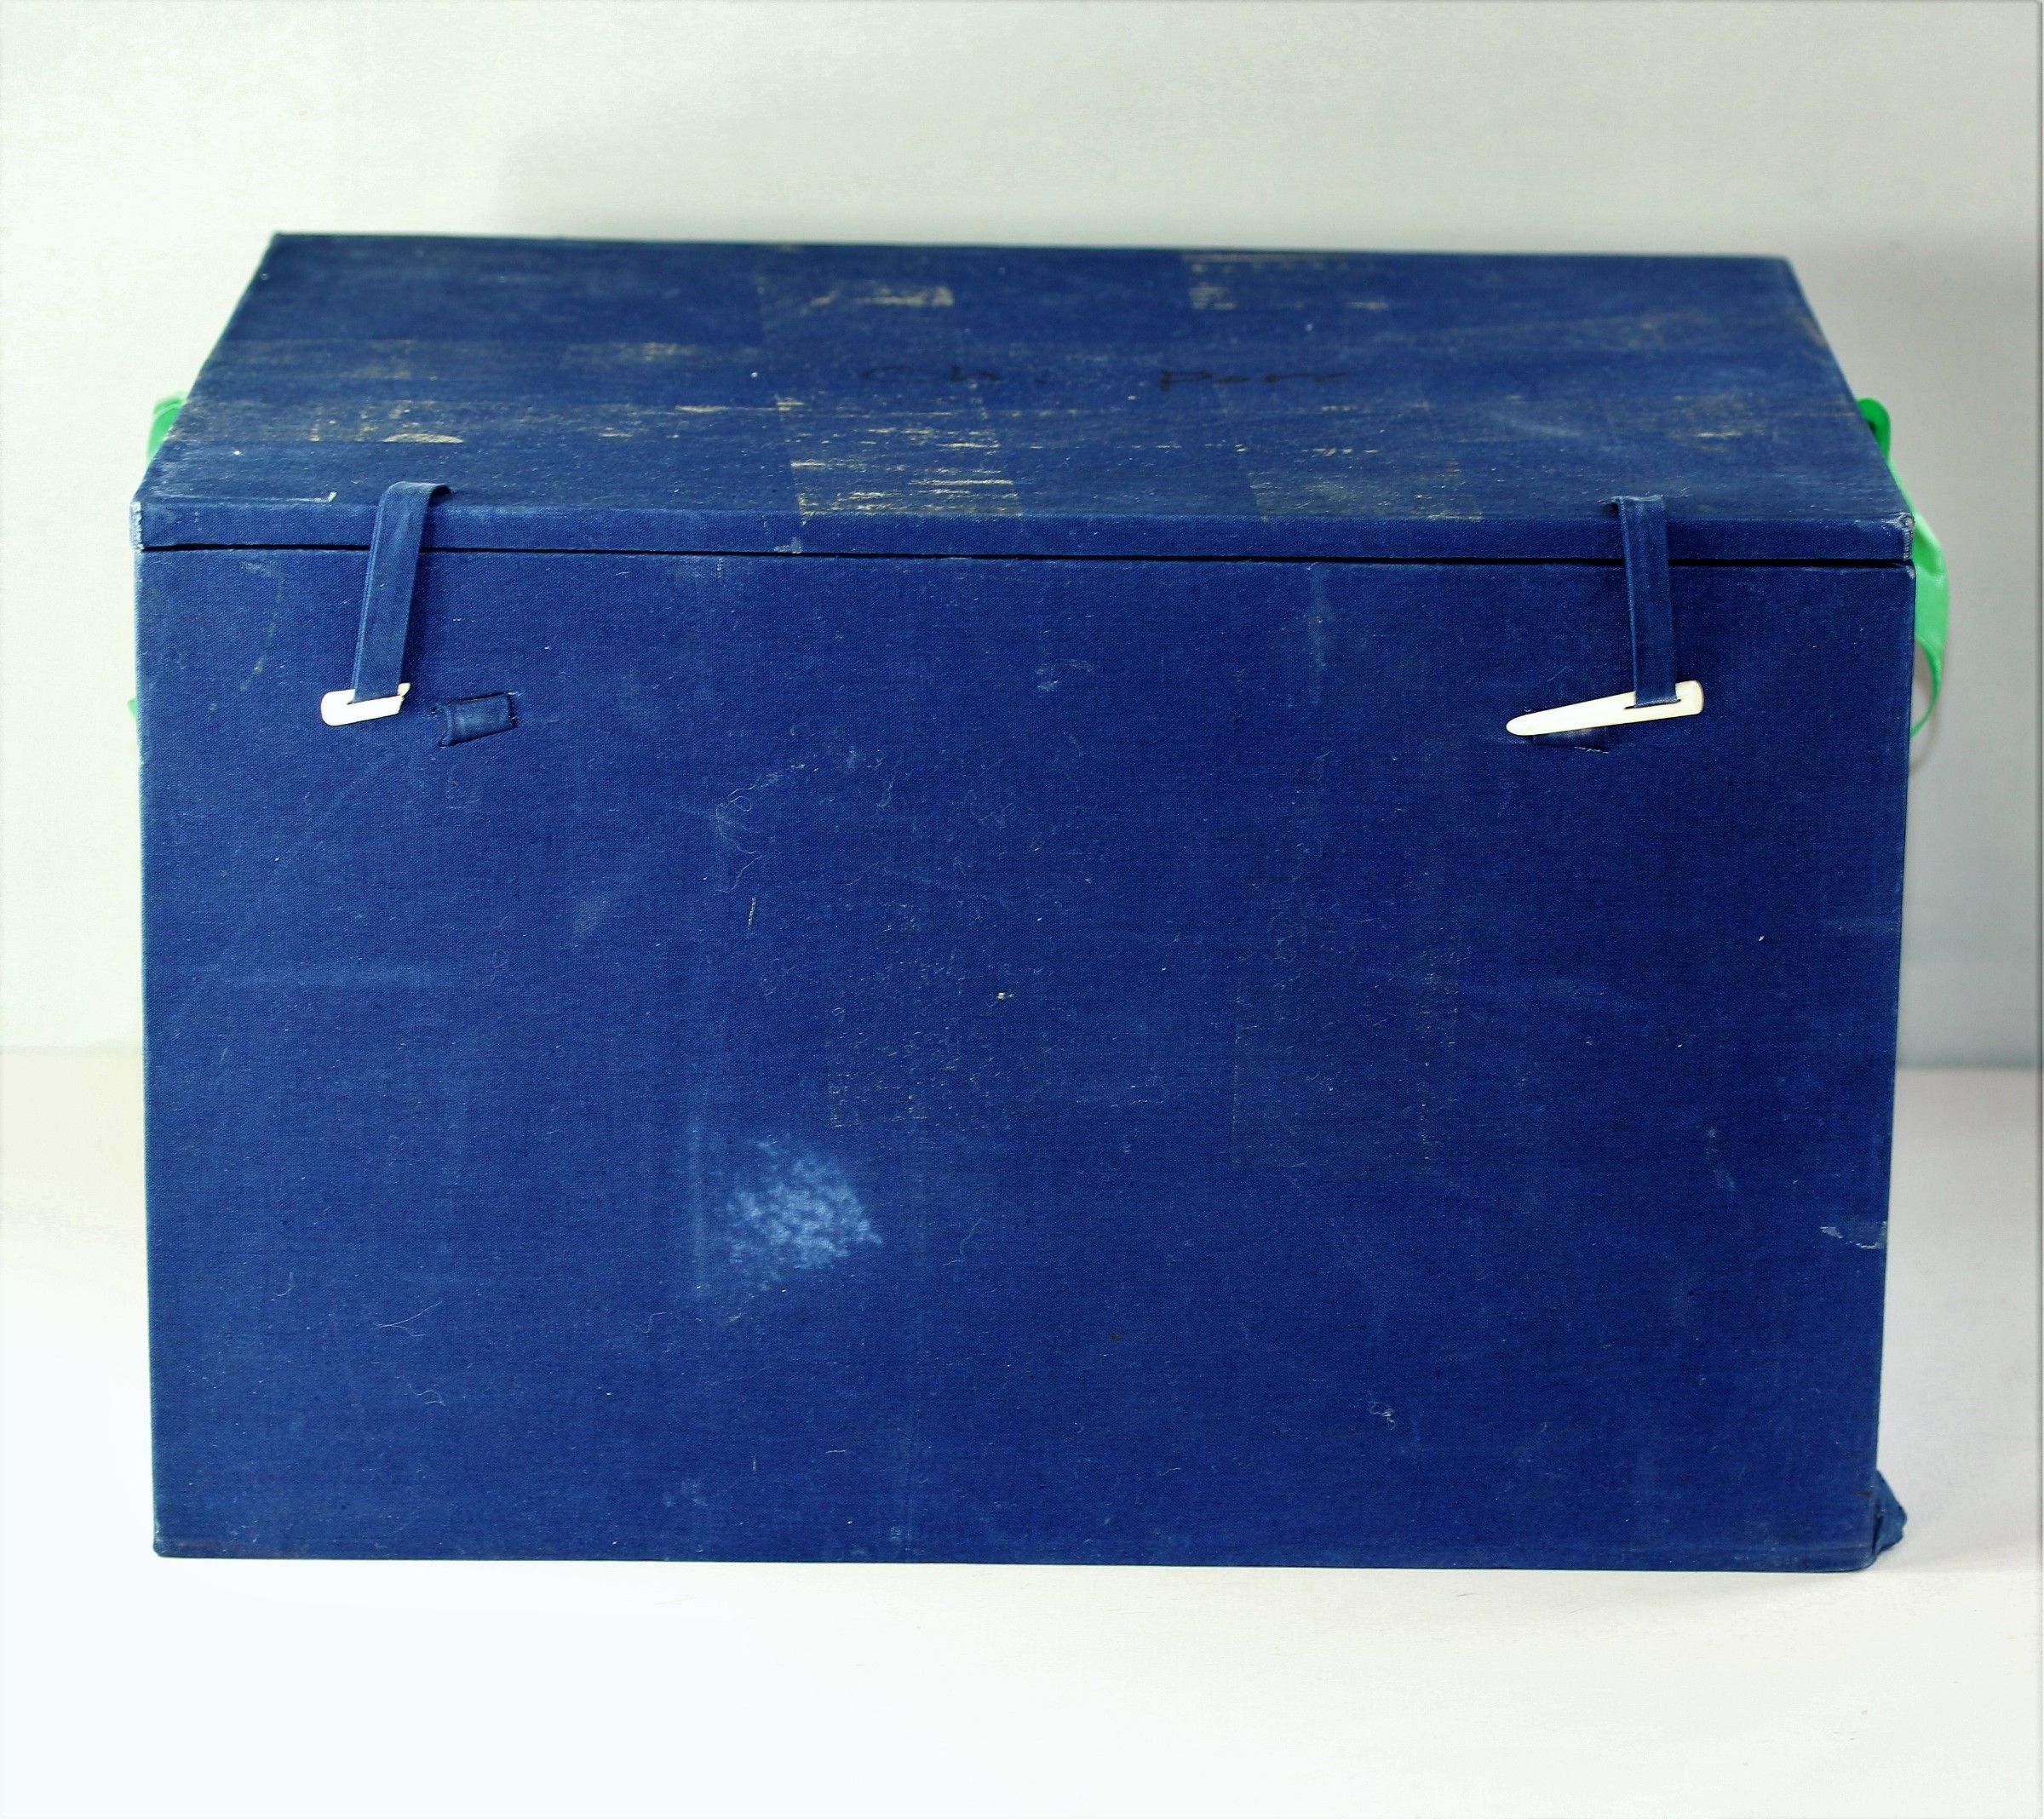 Chinese Blue Fabric Storage Box